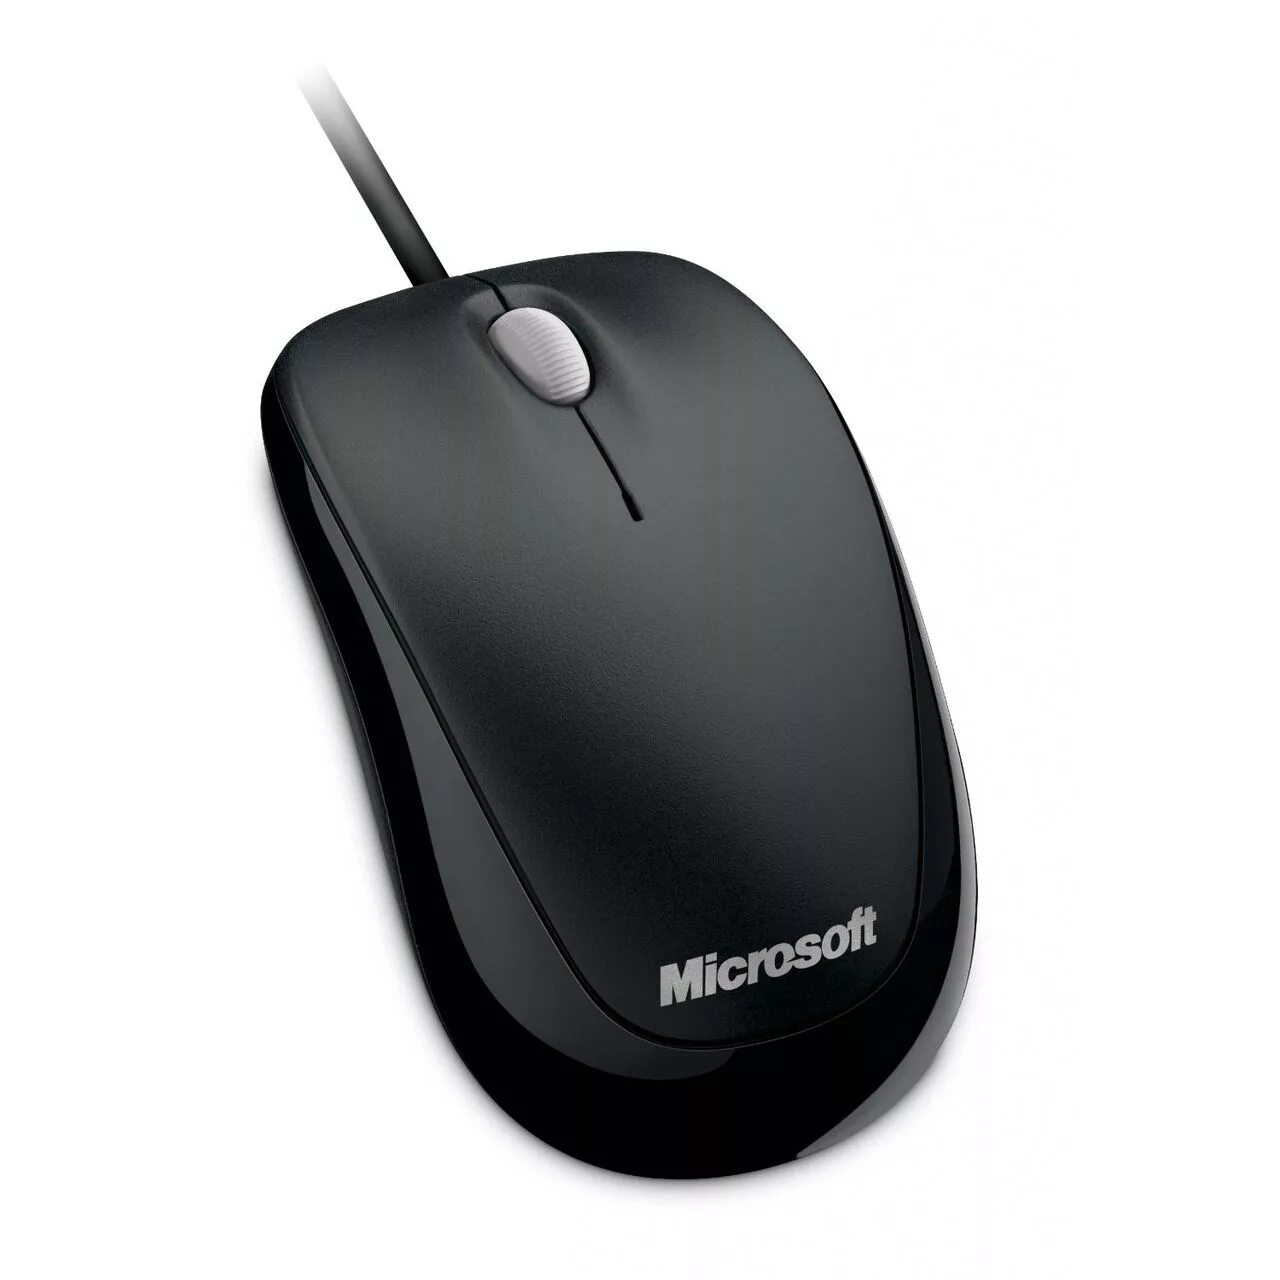 Оптическая мышь Майкрософт. Microsoft USB Optical Mouse. Мышь Microsoft Mouse Compact 100 Optical Grey USB. Мышь icon Hybrid xp500 Black USB.